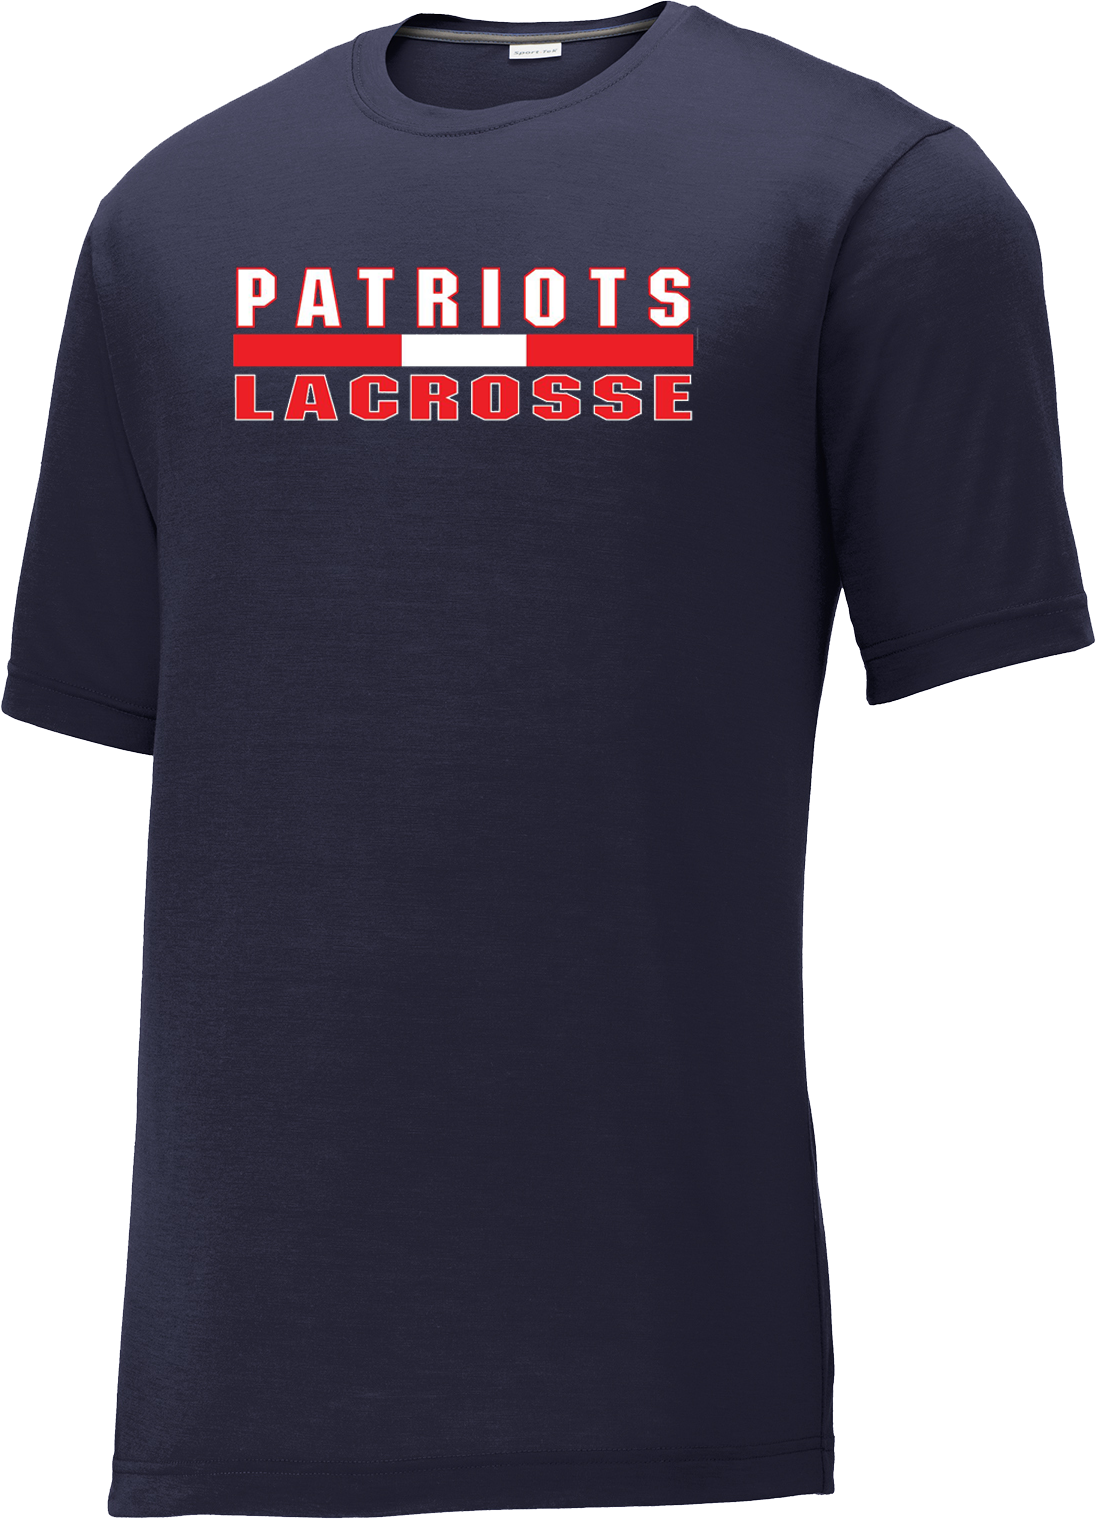 Bob Jones Lacrosse 10th Season Navy CottonTouch Performance T-Shirt